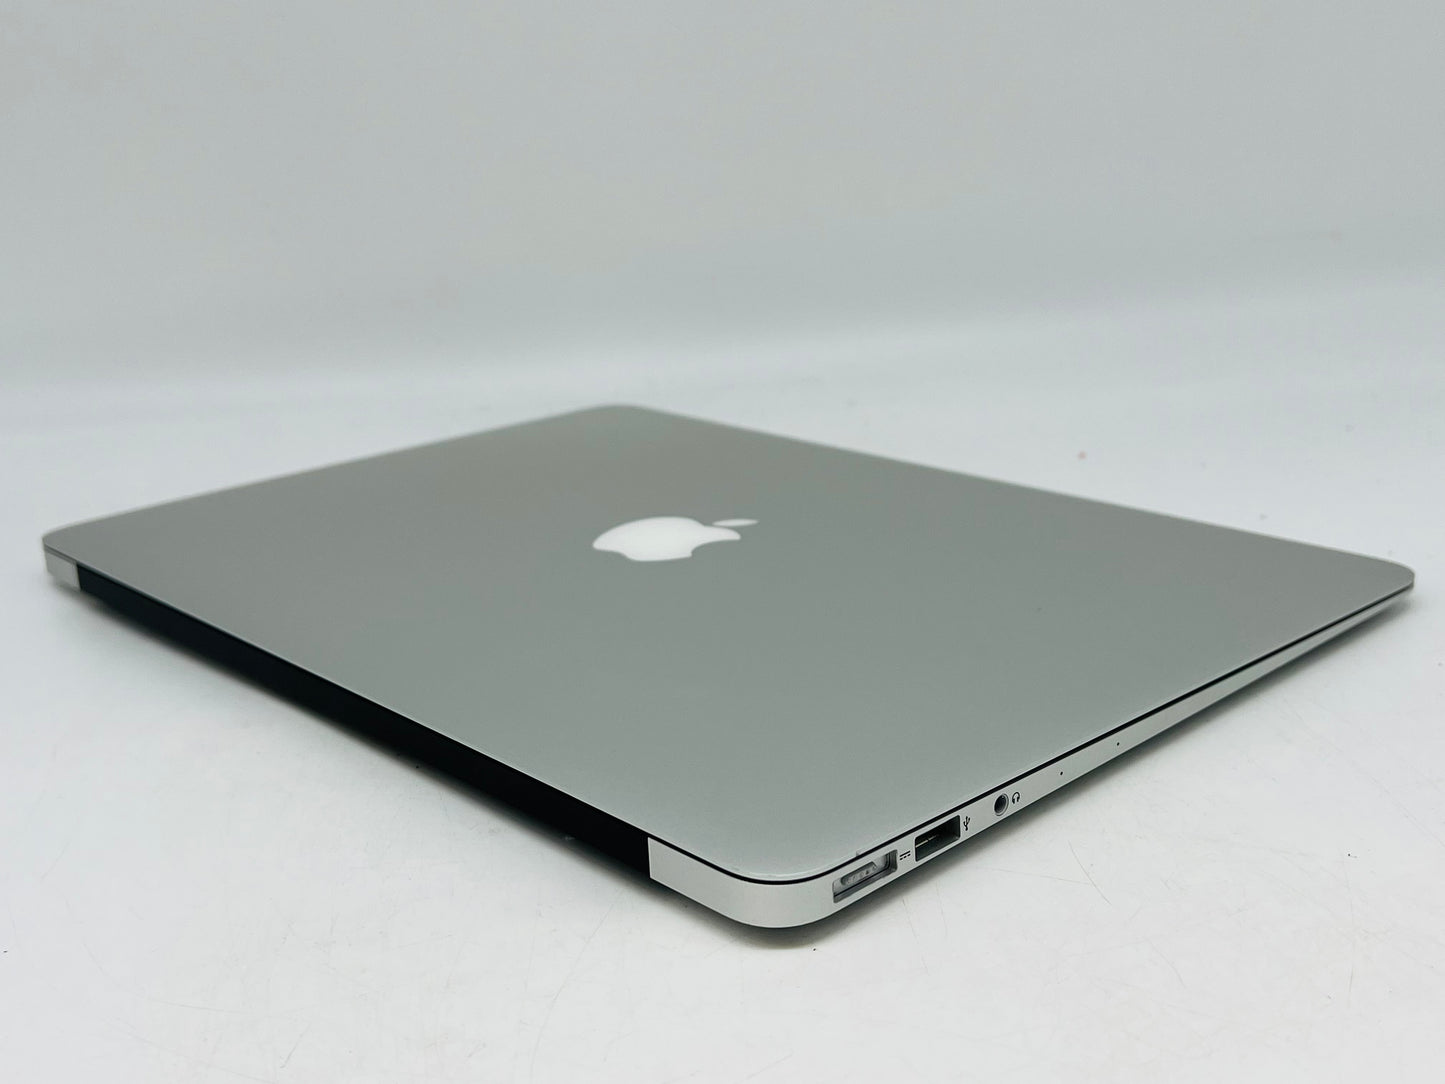 Apple 2017 MacBook Air 1.8GHz Dual-Core i5 8GB RAM 128GB SSD